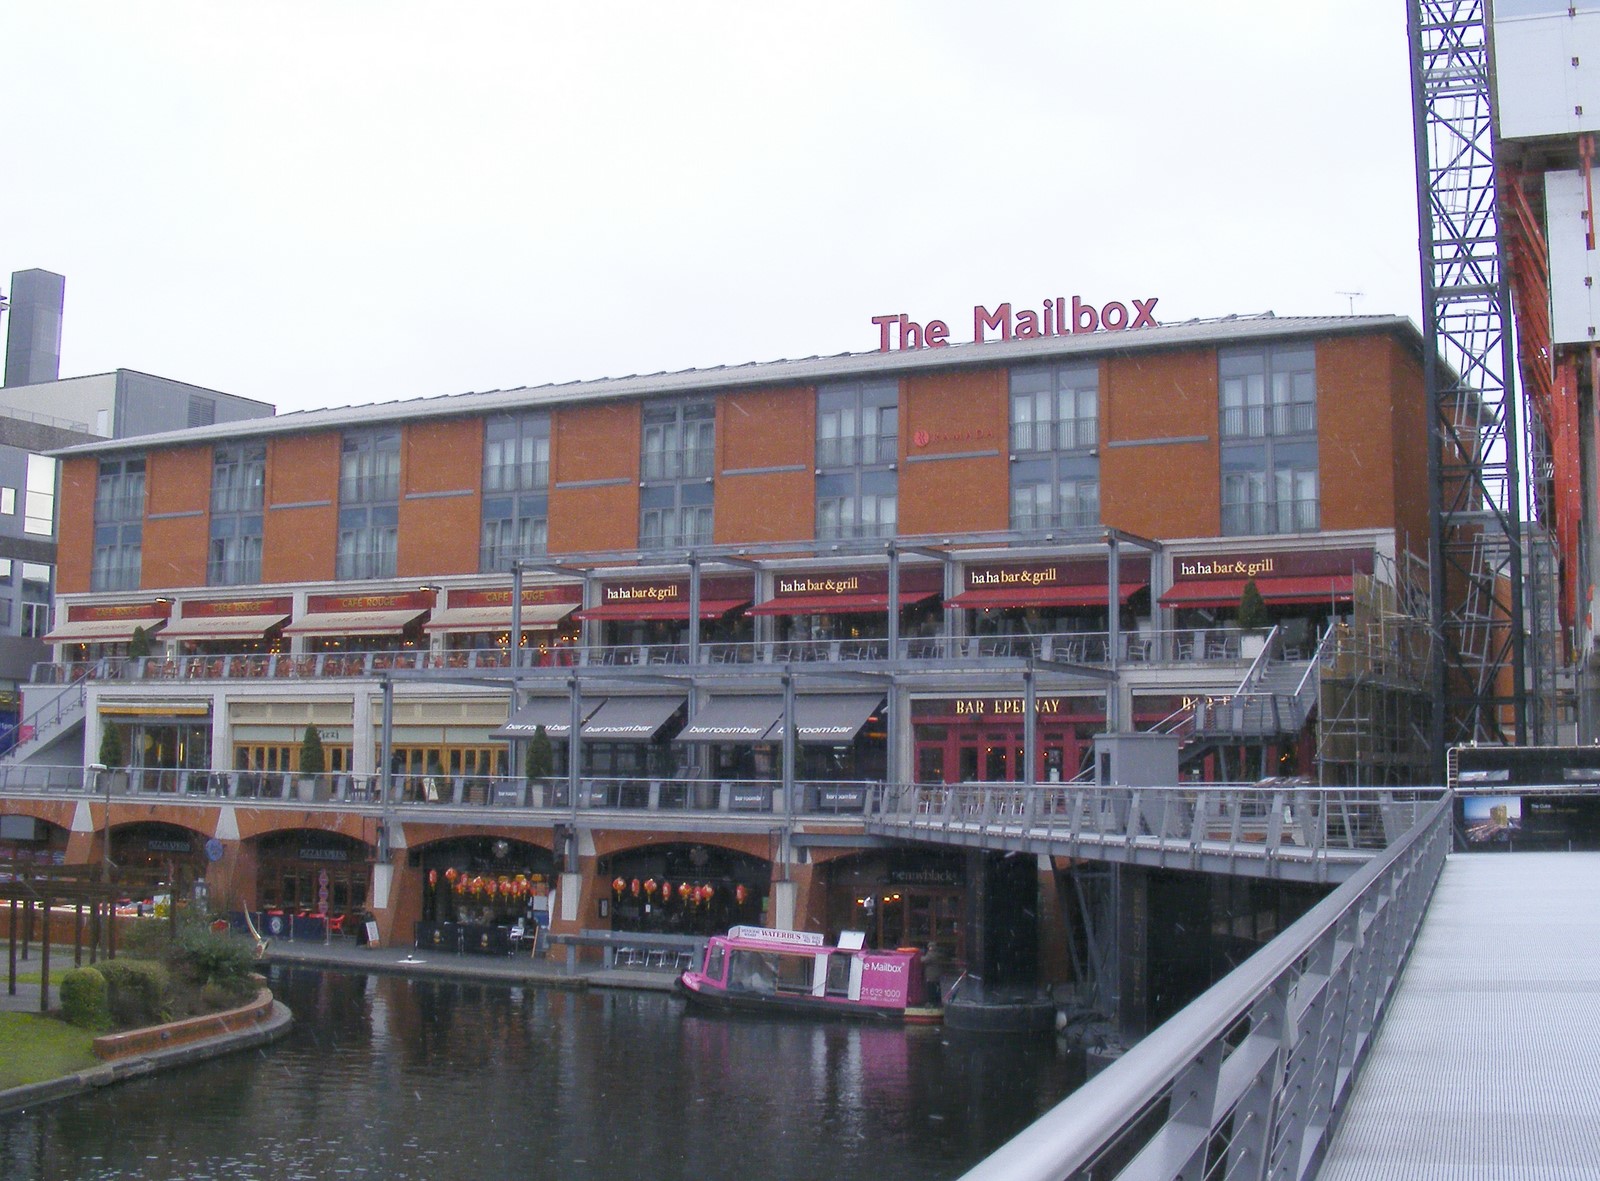 The Mailbox, Birmingham, canalside restaurants